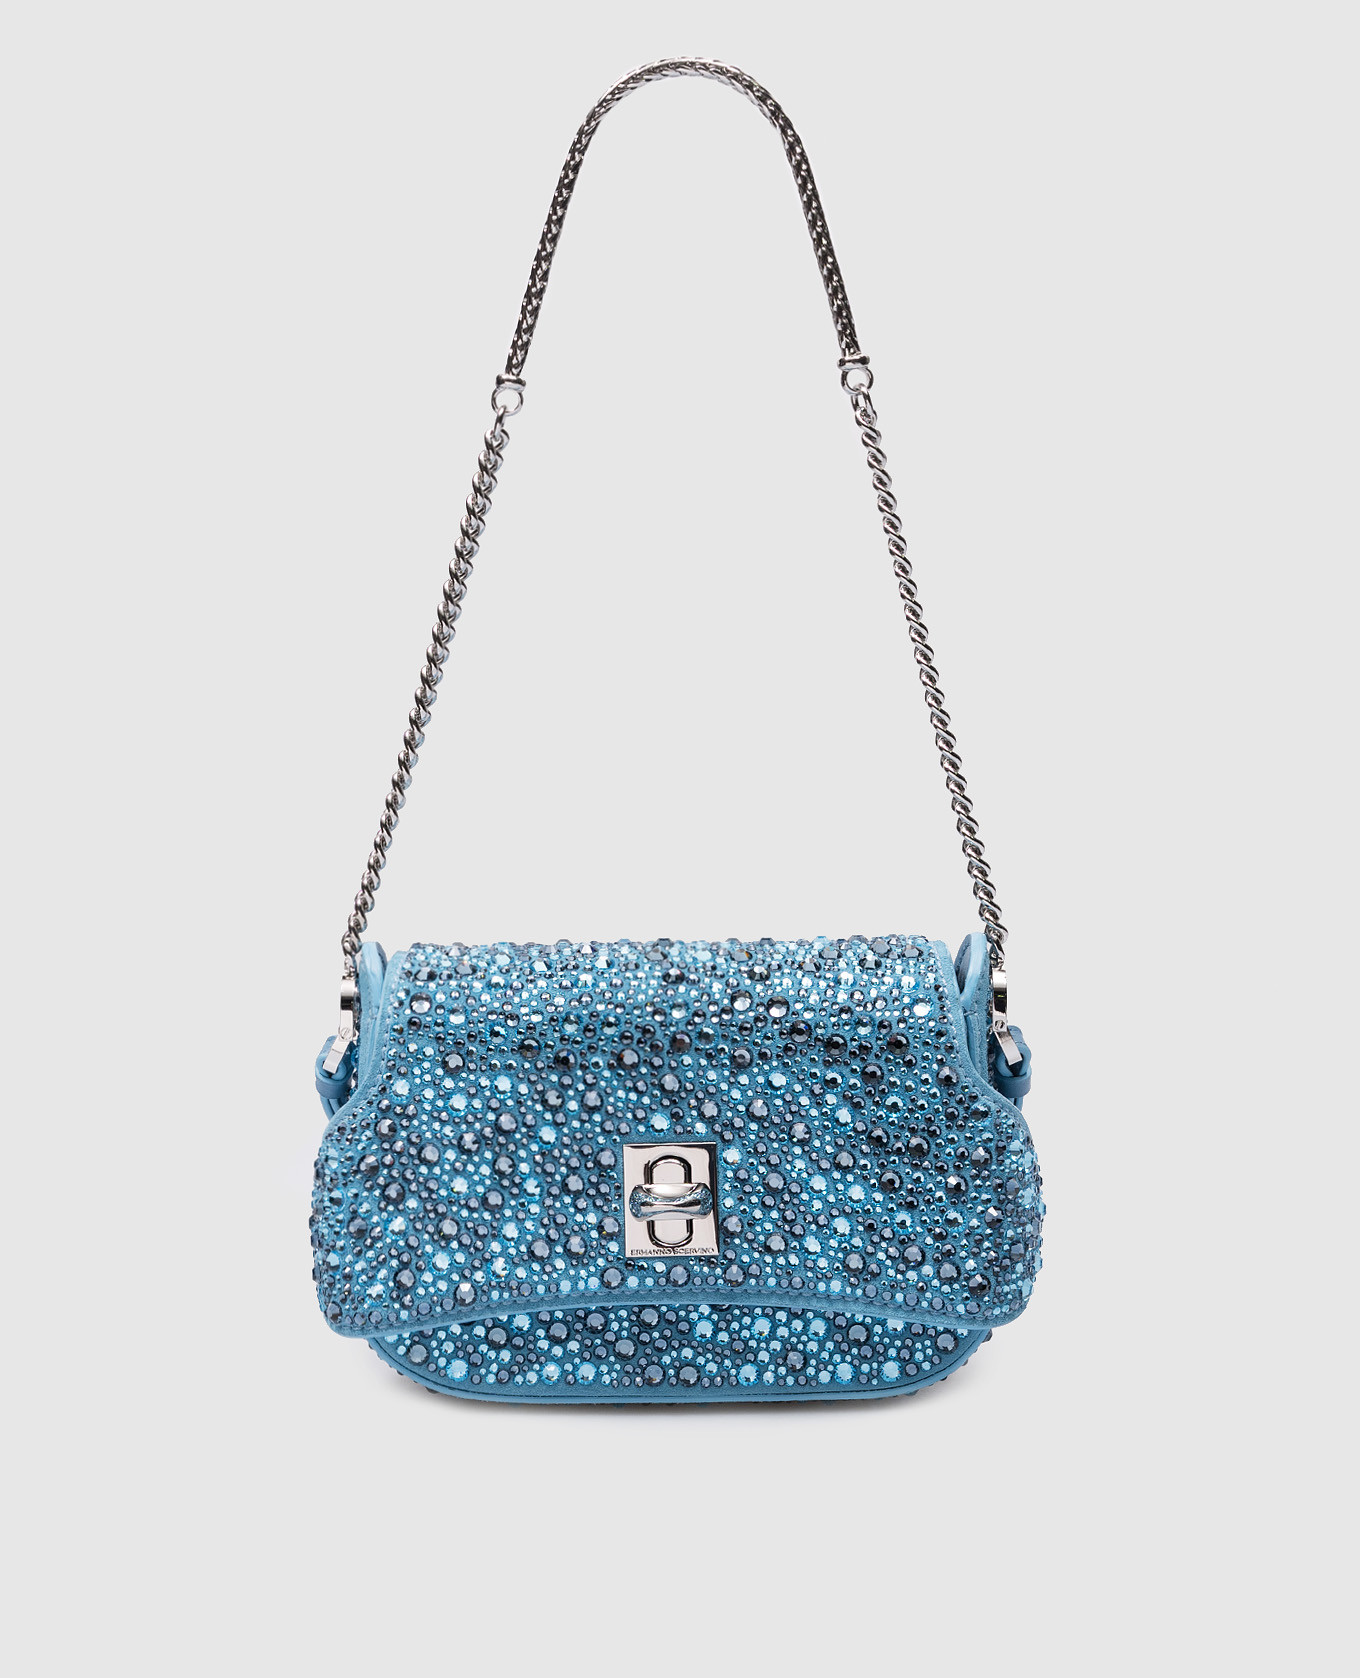 Audrey crystal crossbody bag in blue suede